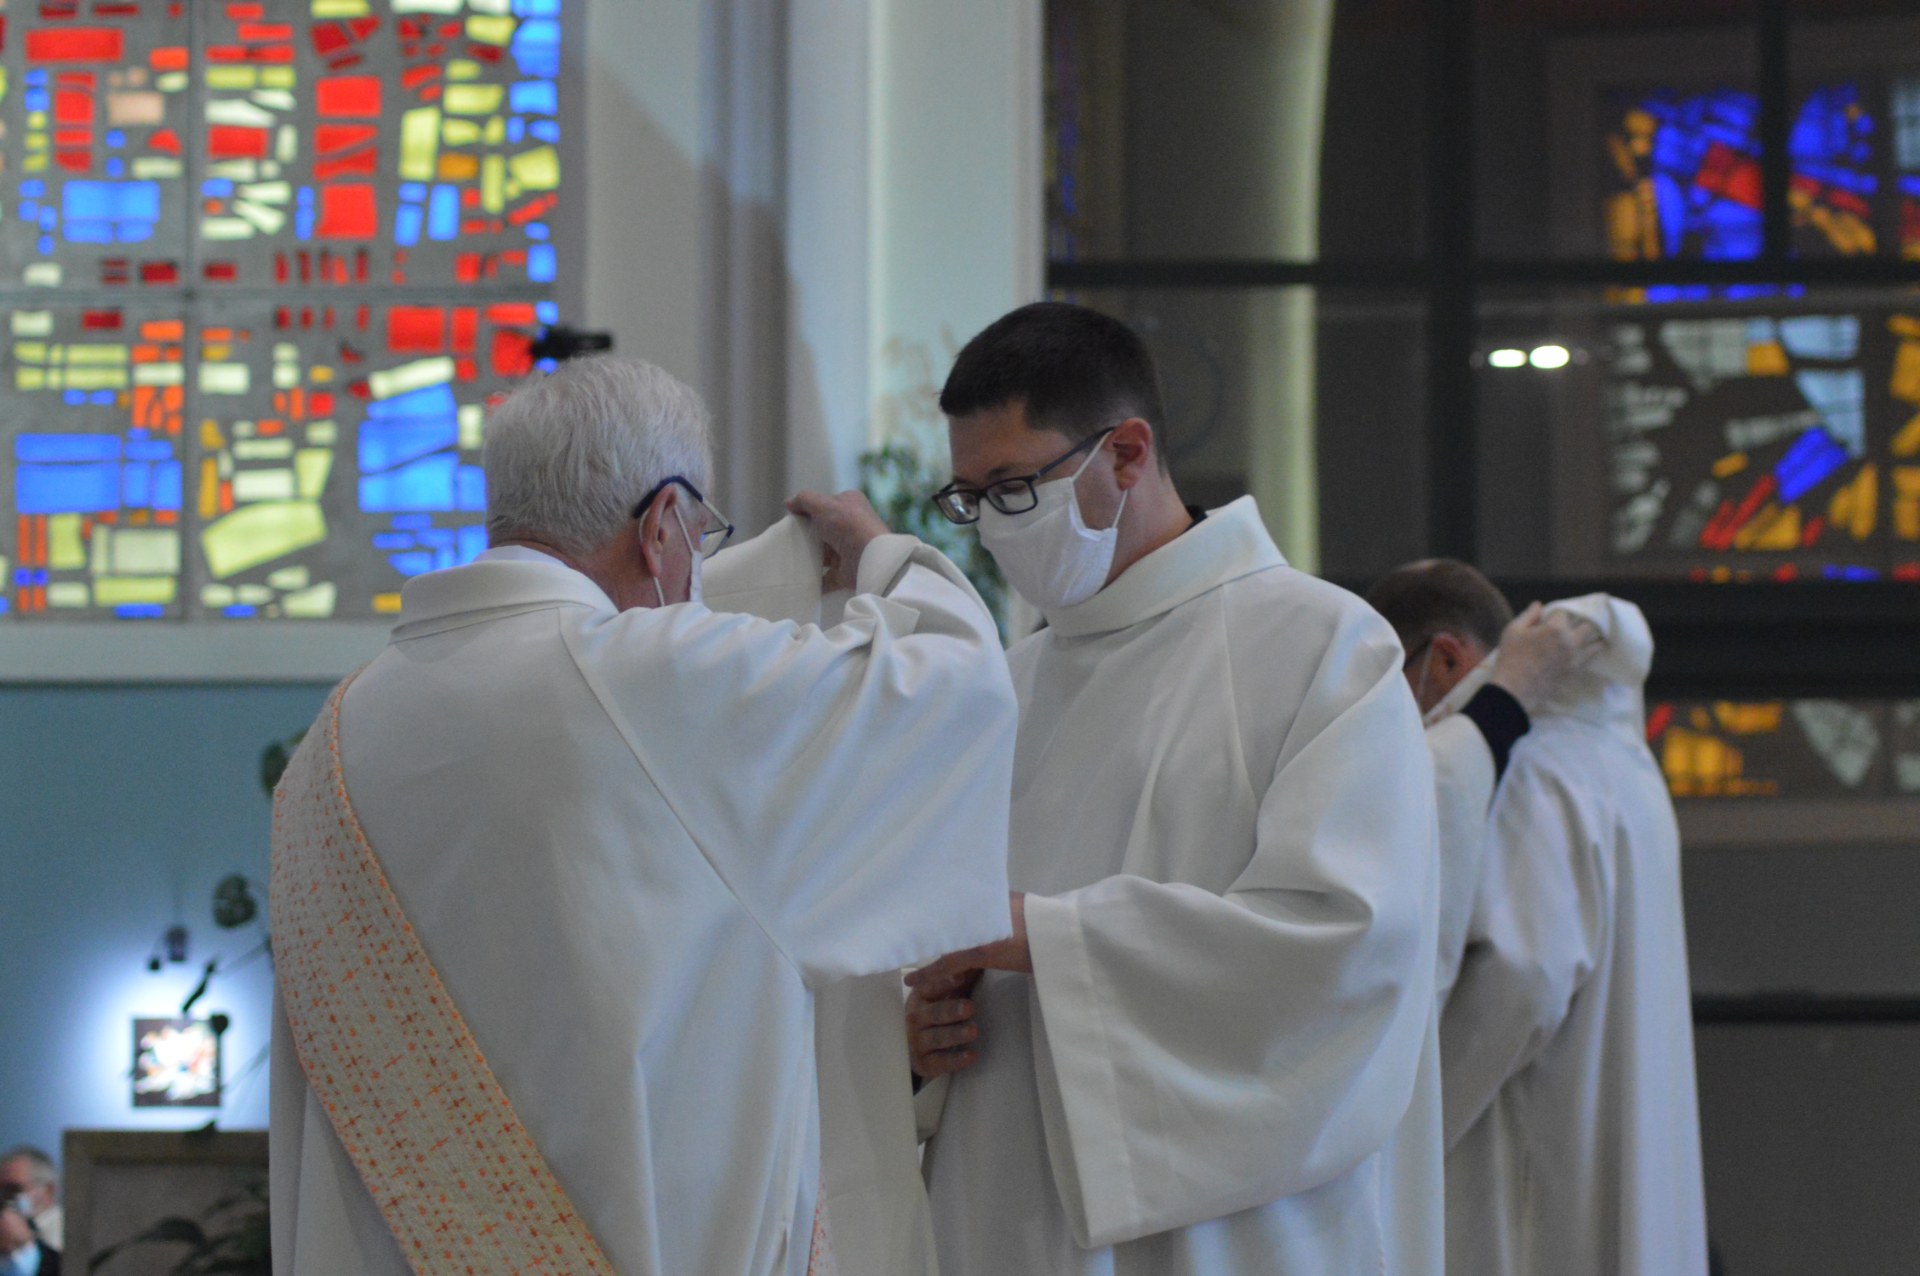 ordinations diaconales Maubeuge 2021 7